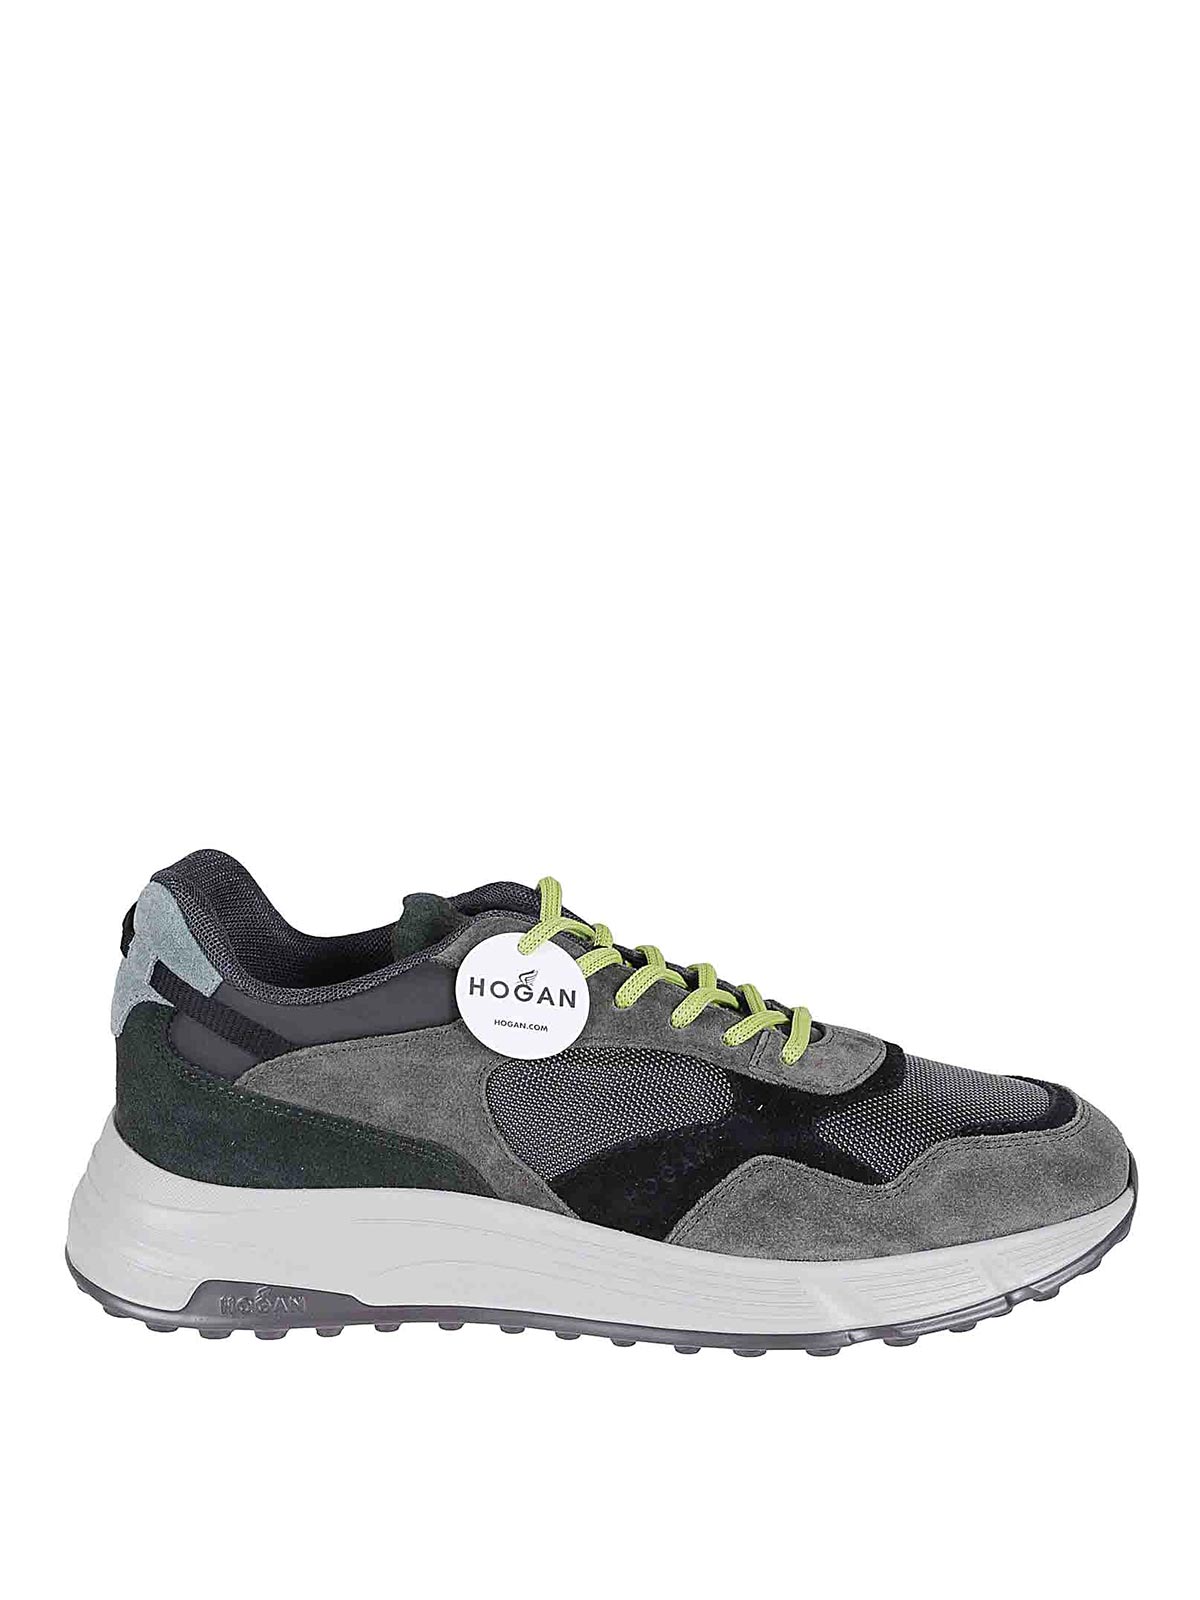 Hogan H563 Sneakers In Green